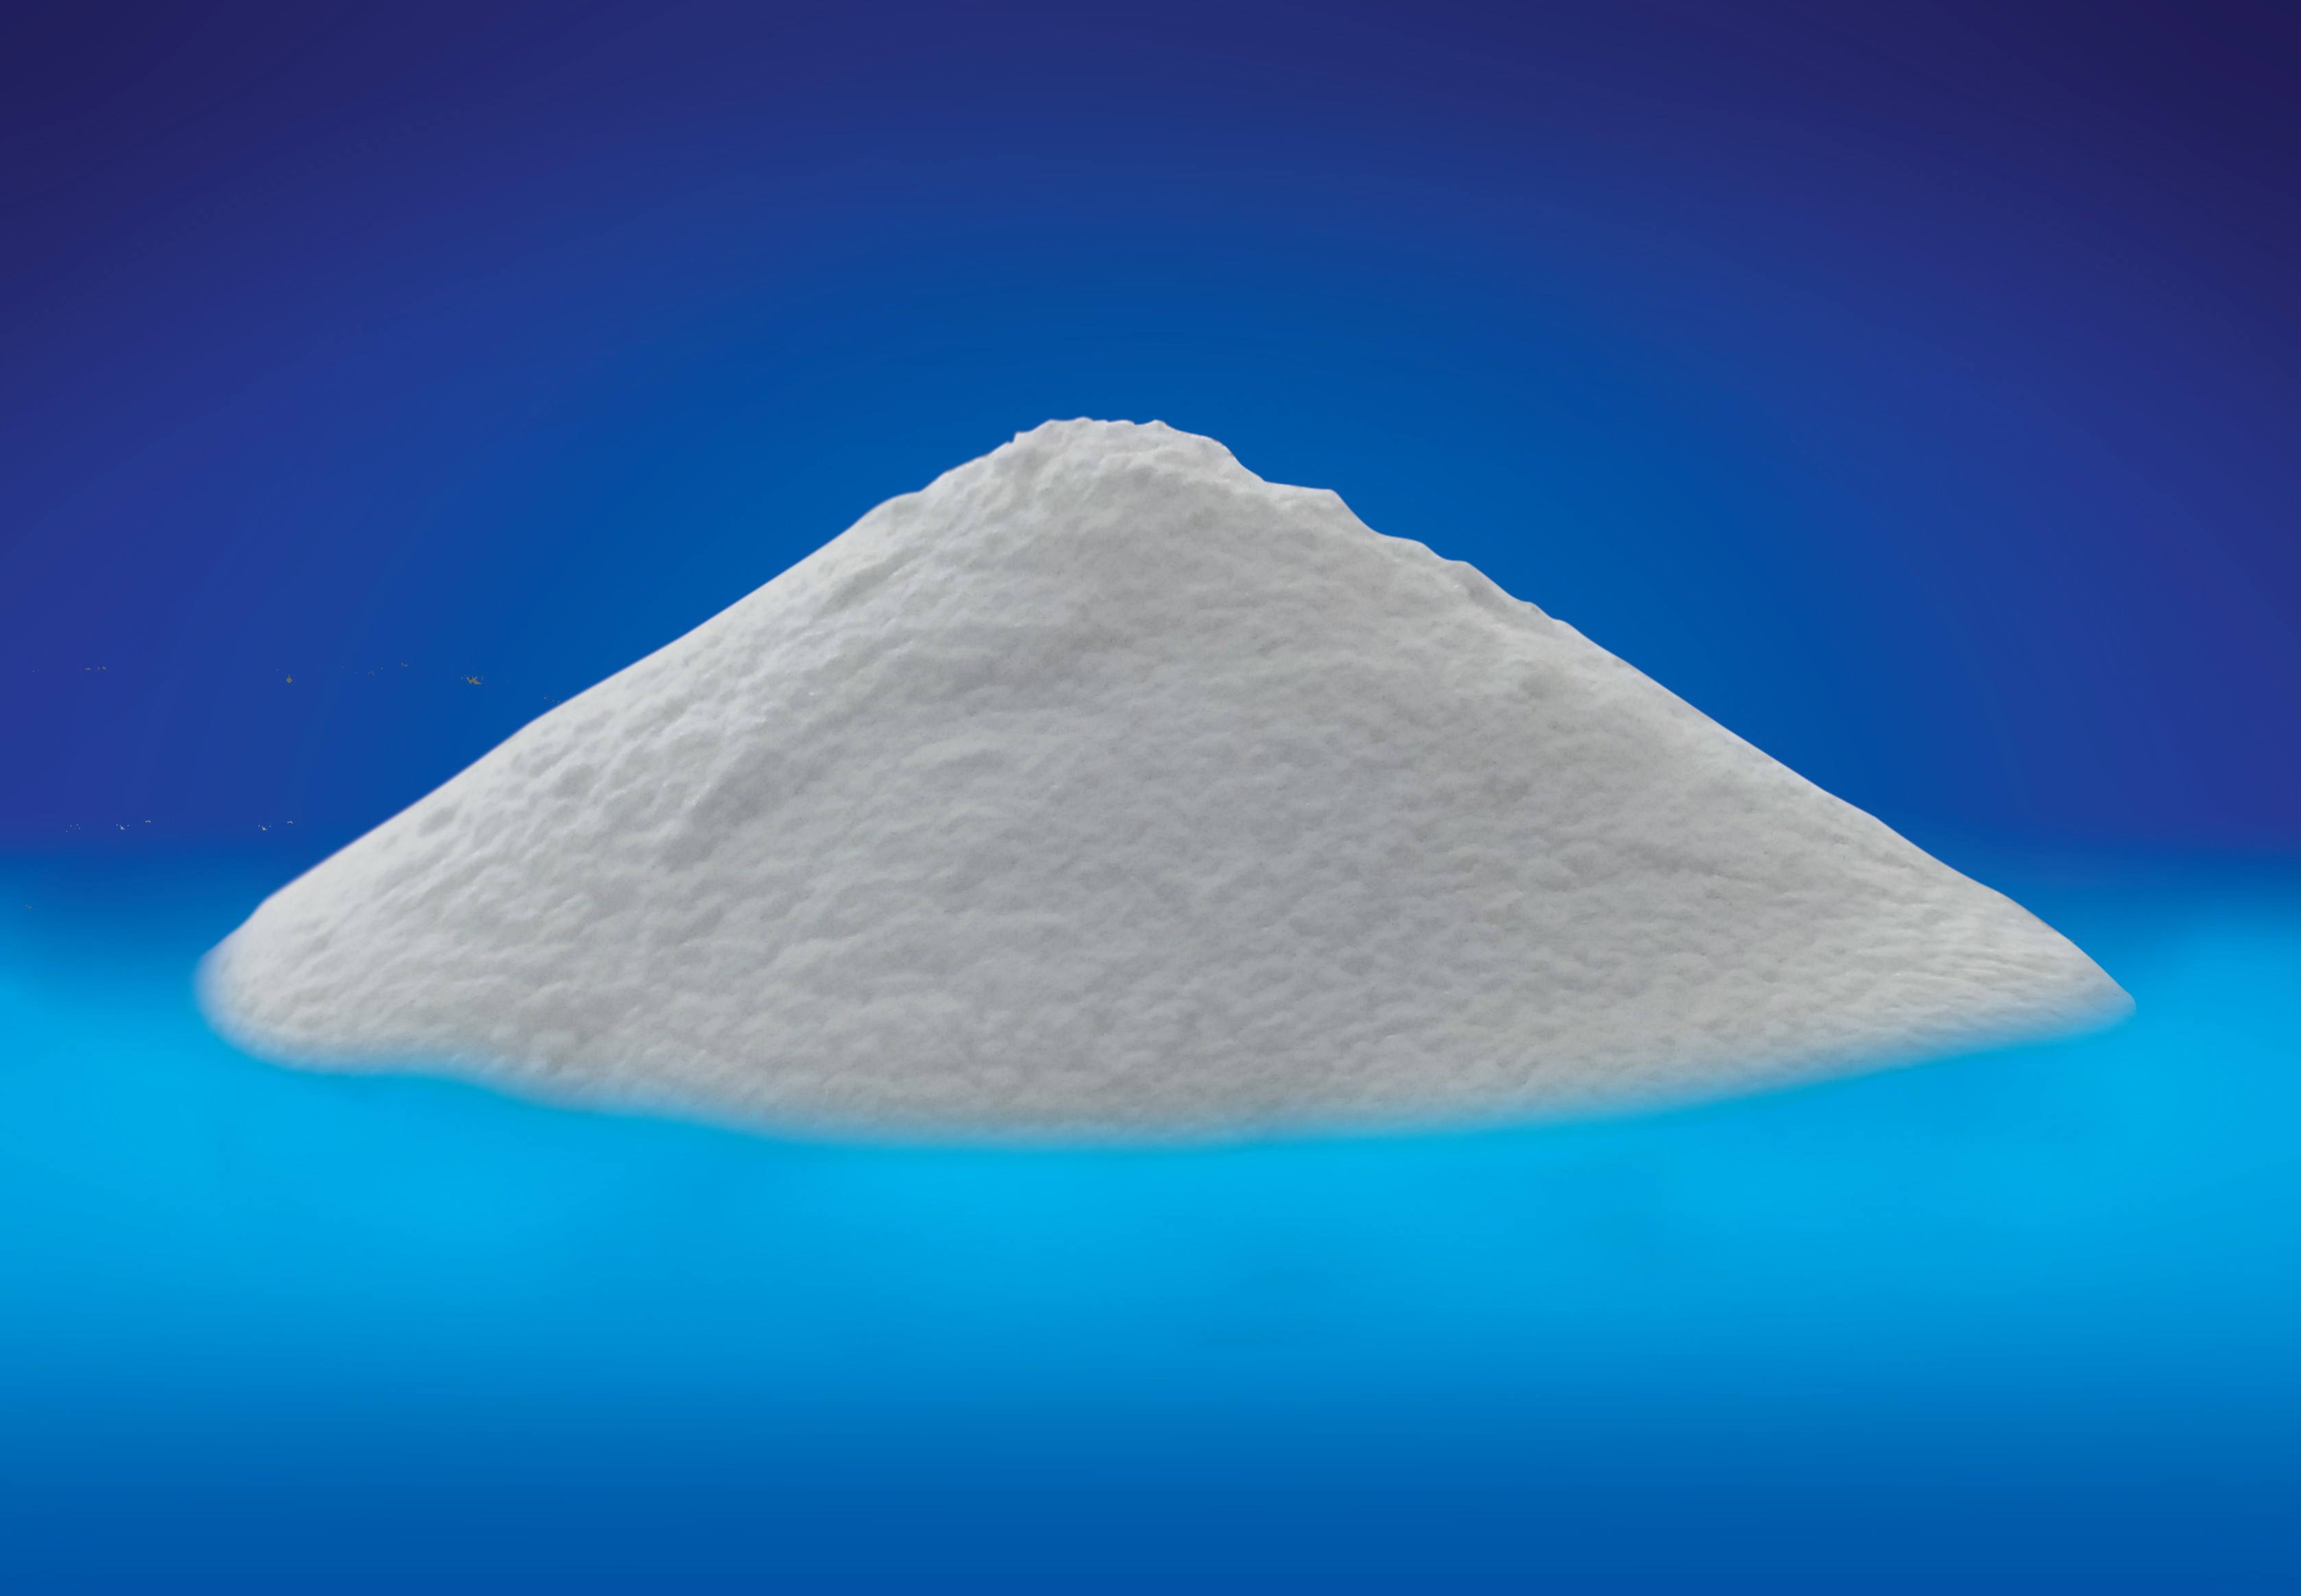 Silicon dioxide White Carbon Black silica white powder animal feed additive